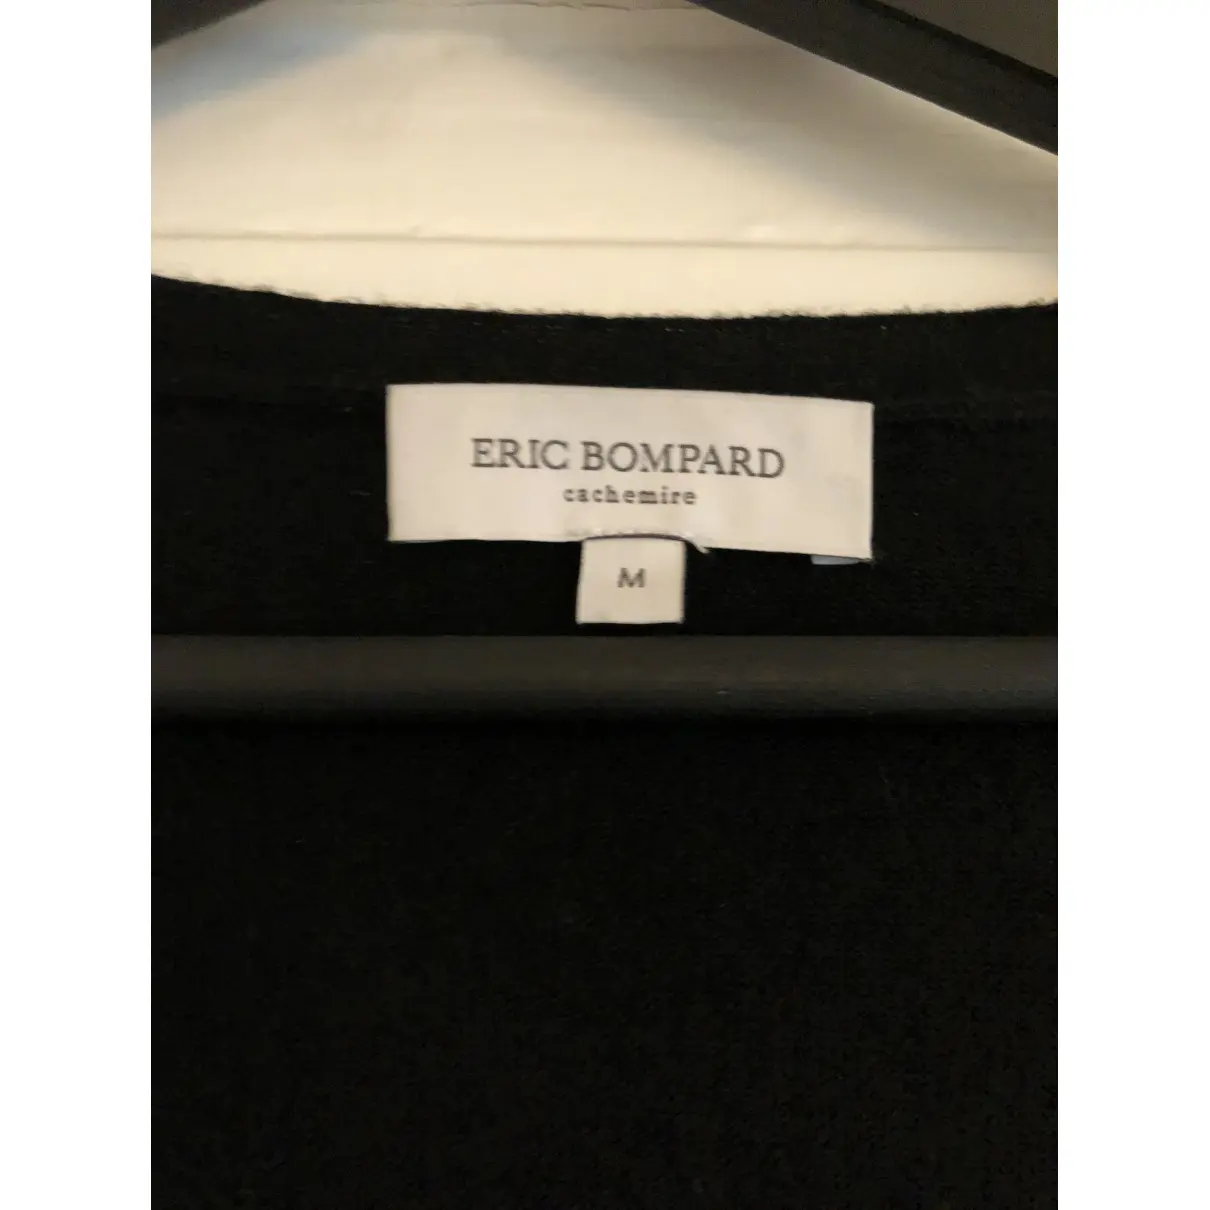 Buy Eric Bompard Cashmere cardigan online